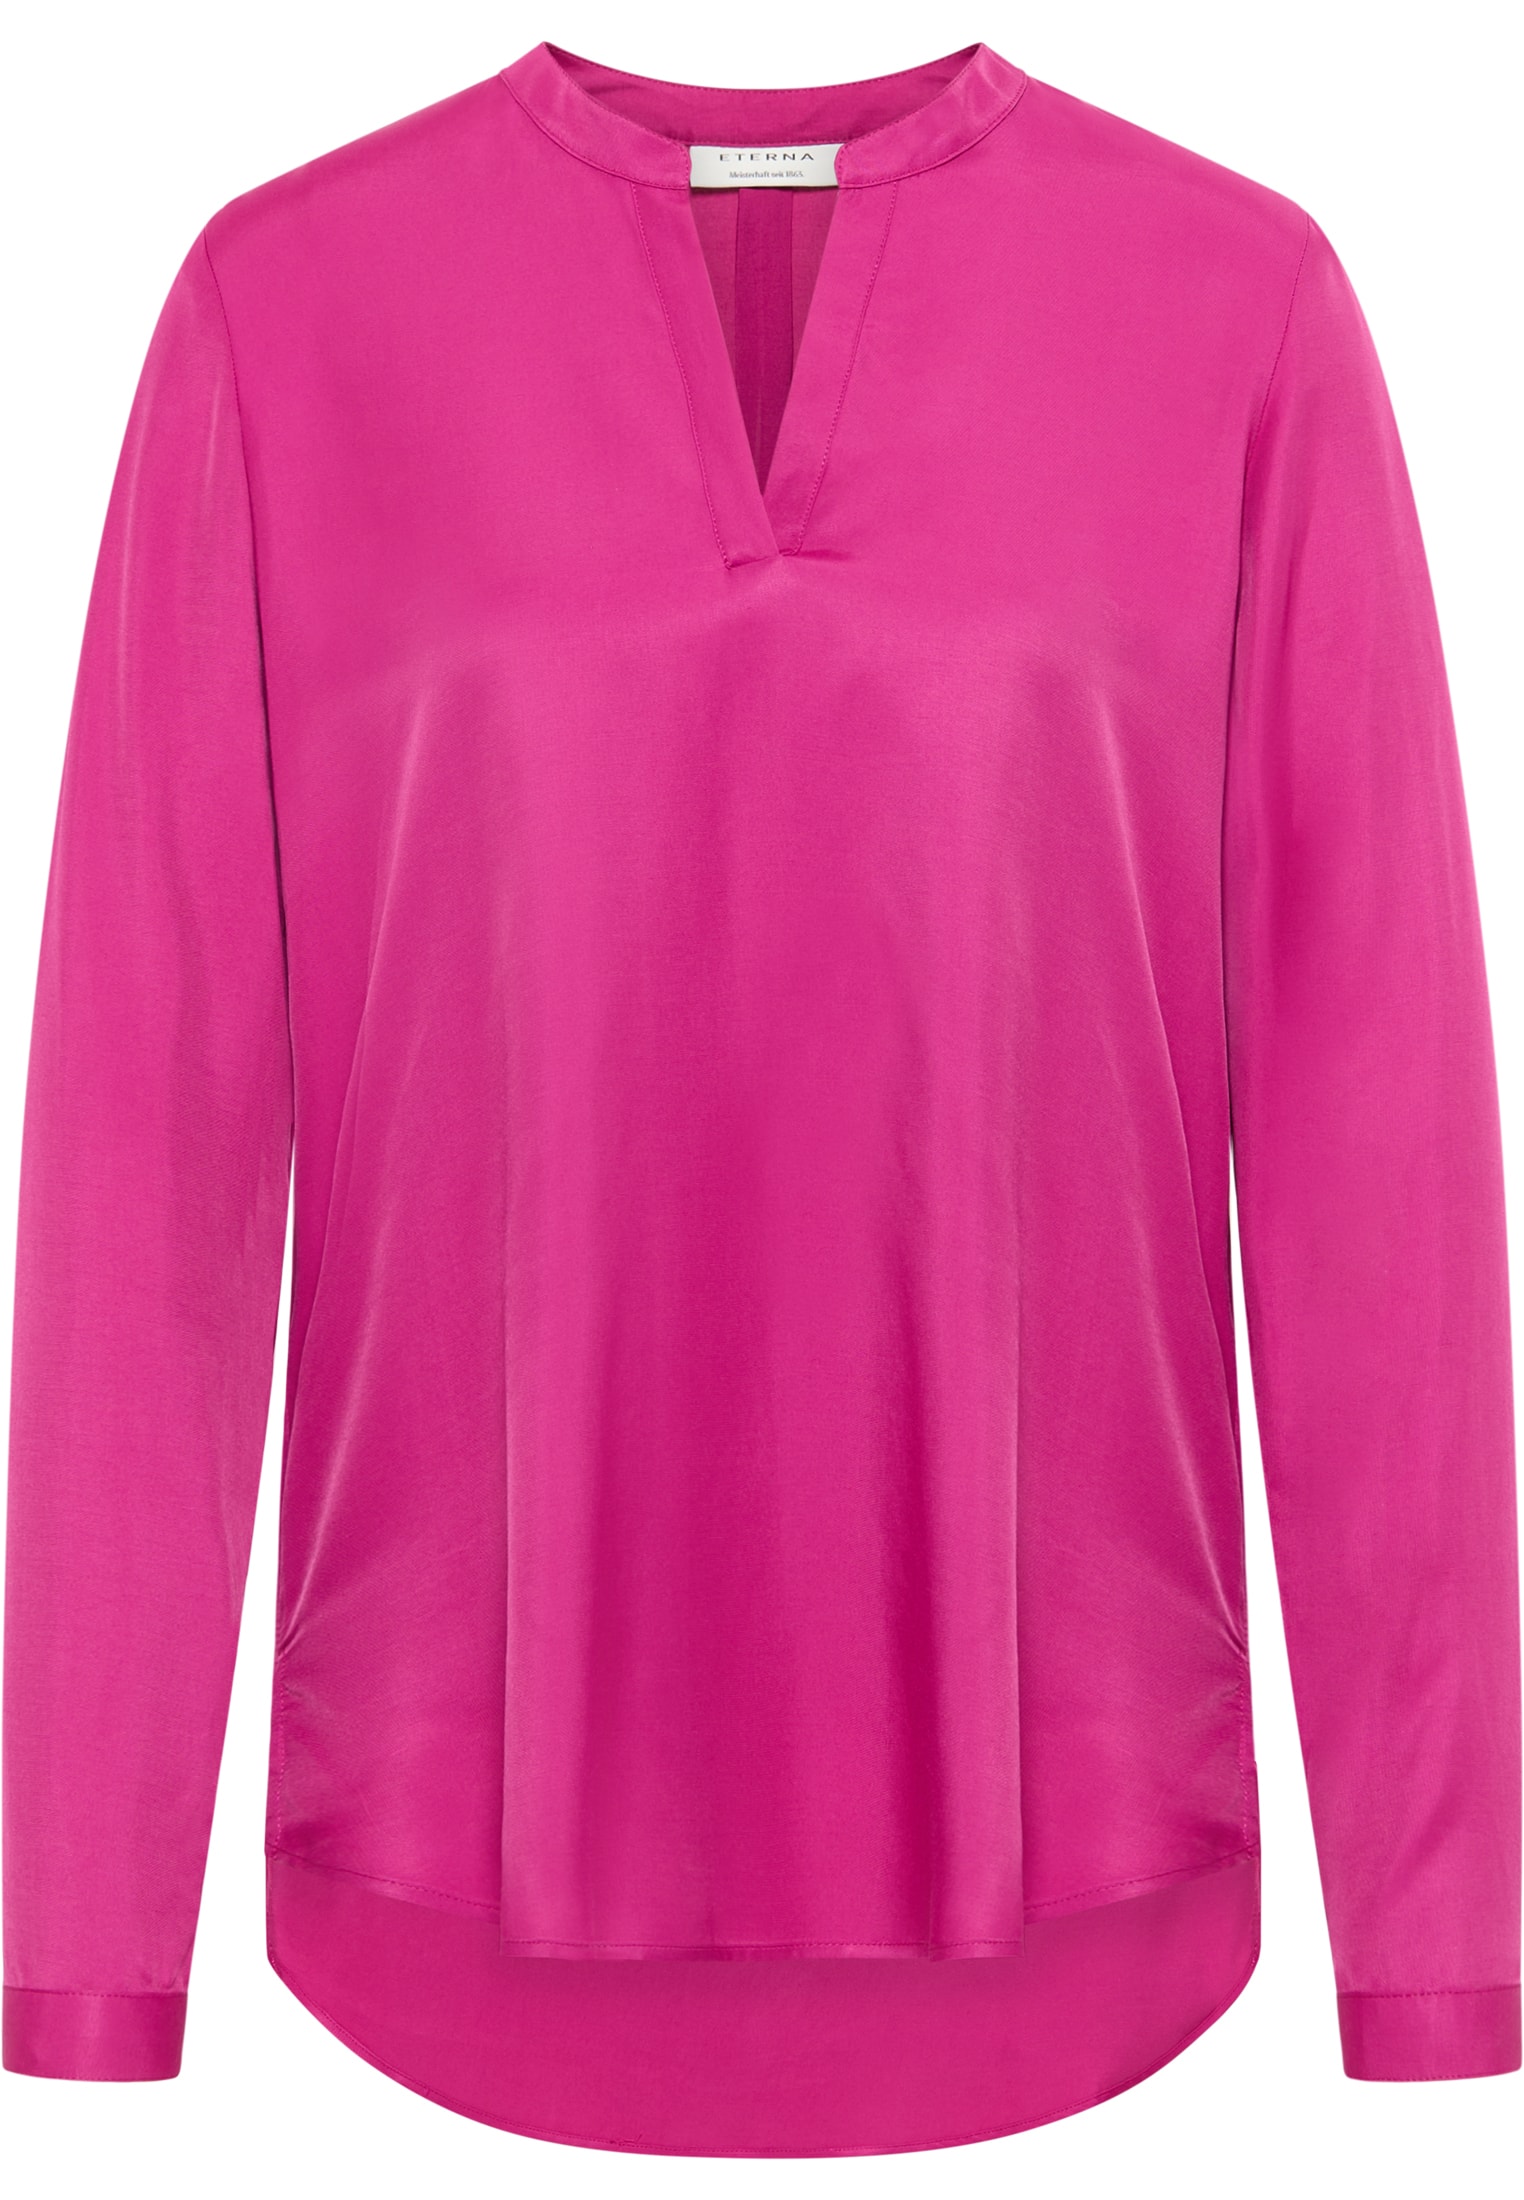 Viscose Shirt Bluse vibrant | | pink in pink unifarben | vibrant | 2BL00329-15-31-34-1/1 34 Langarm